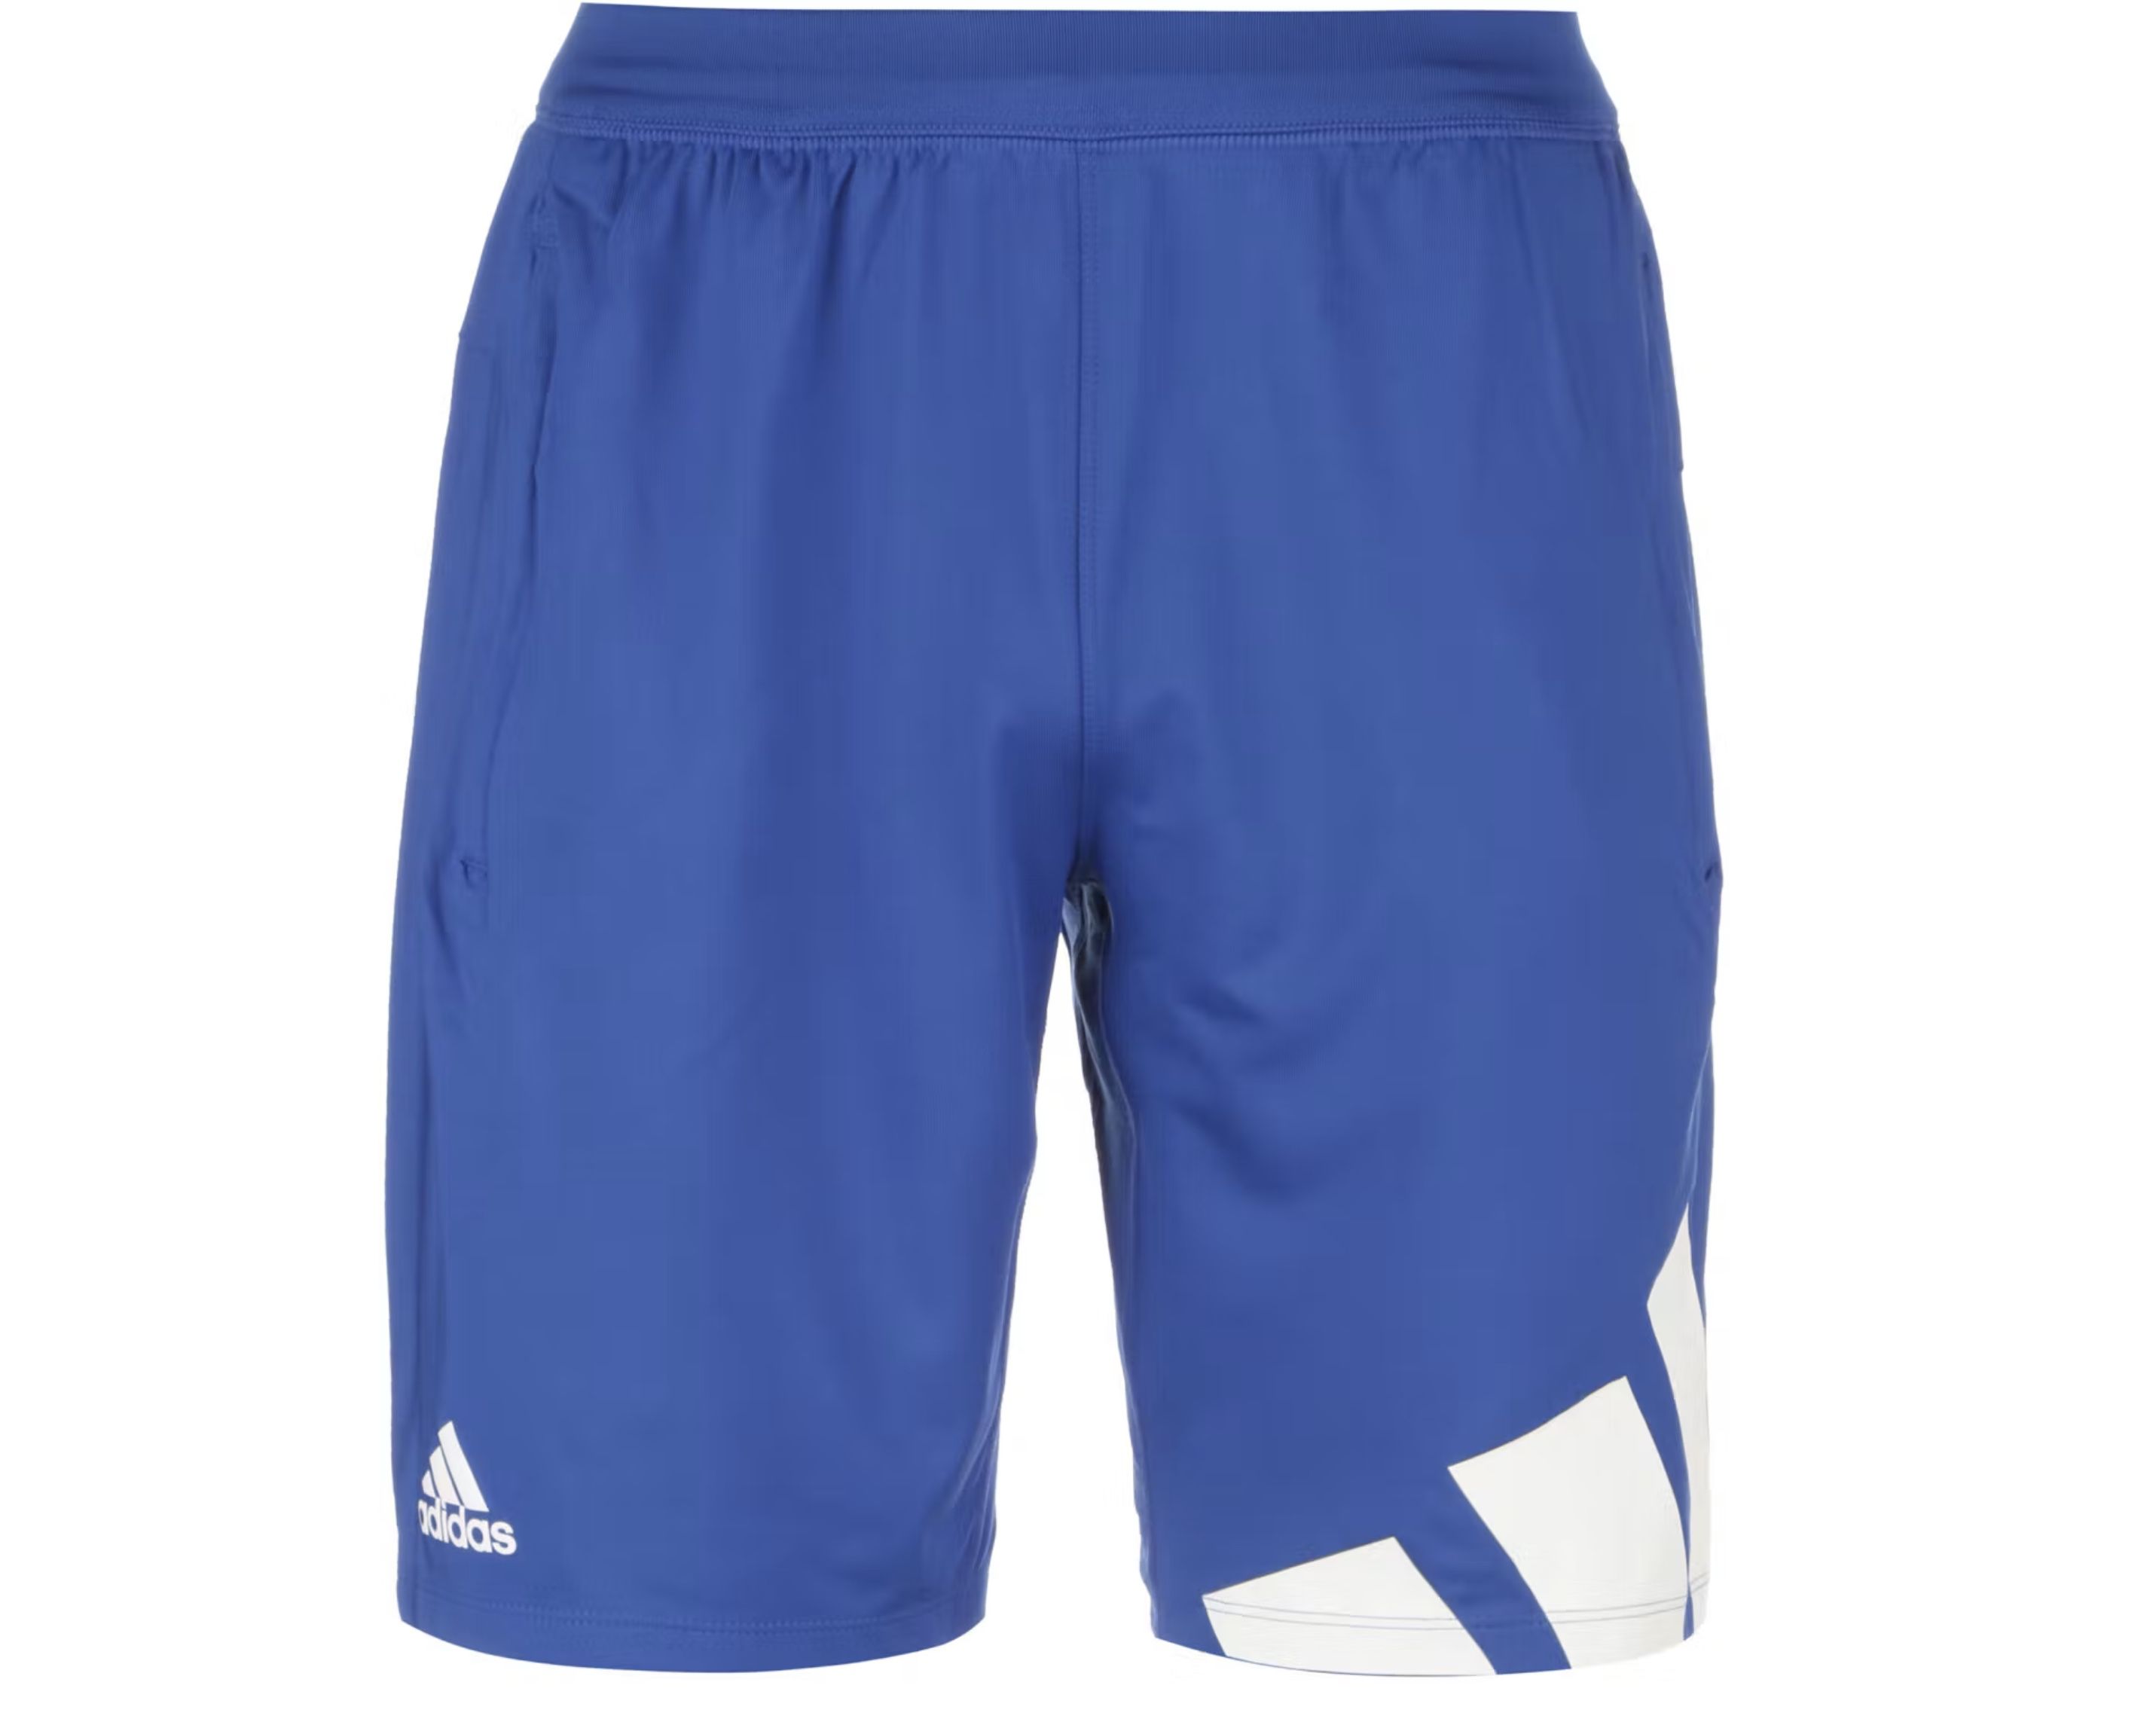 adidas 4K 3 BAR Shorts in Blau für 13,98€ (statt 23€)